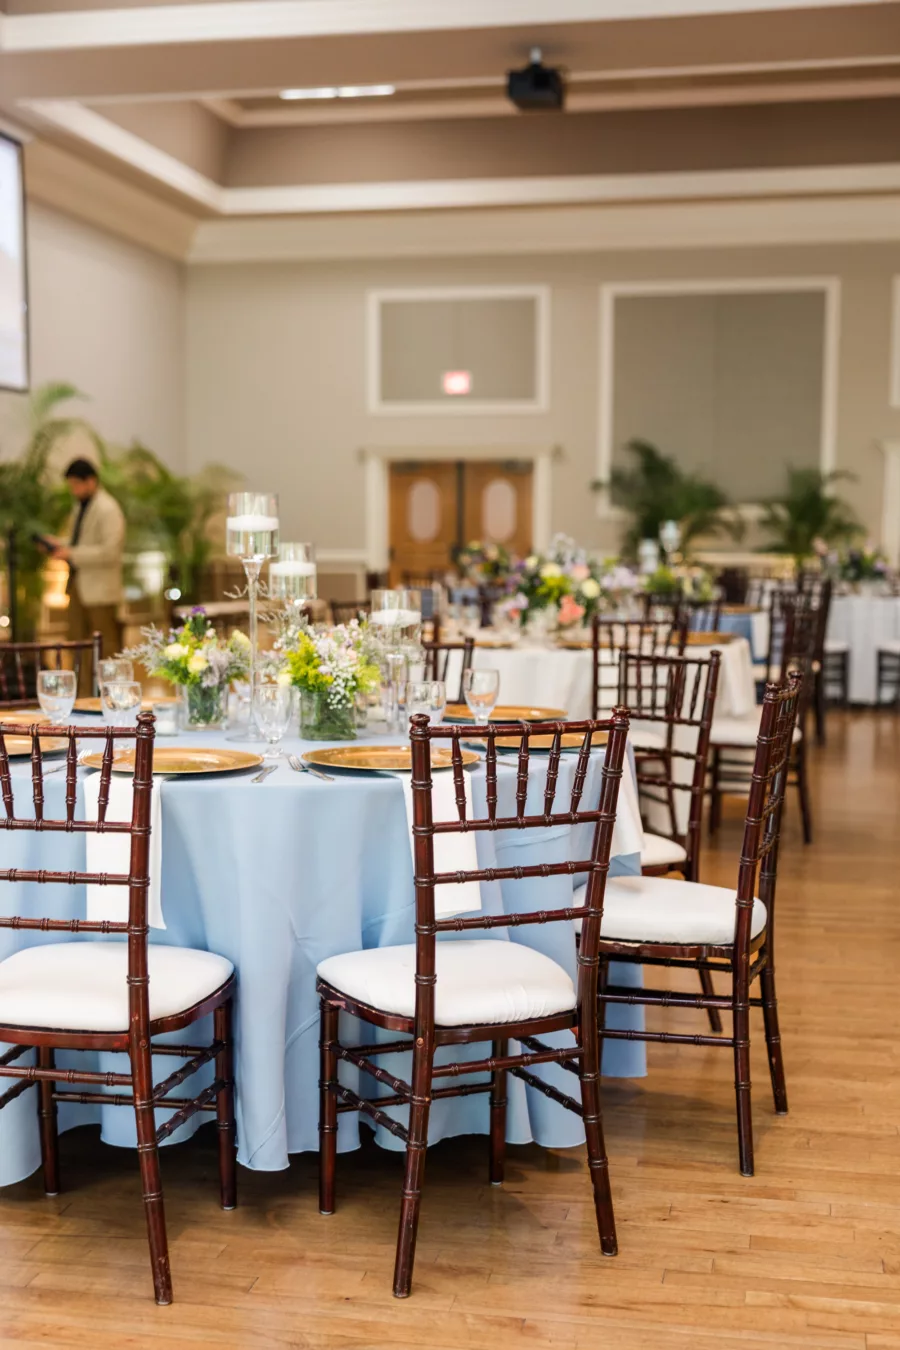 Blue and Peach Spring English Garden Inspired Ballroom Wedding Reception with Mahogany Chiavari Chairs Ideas